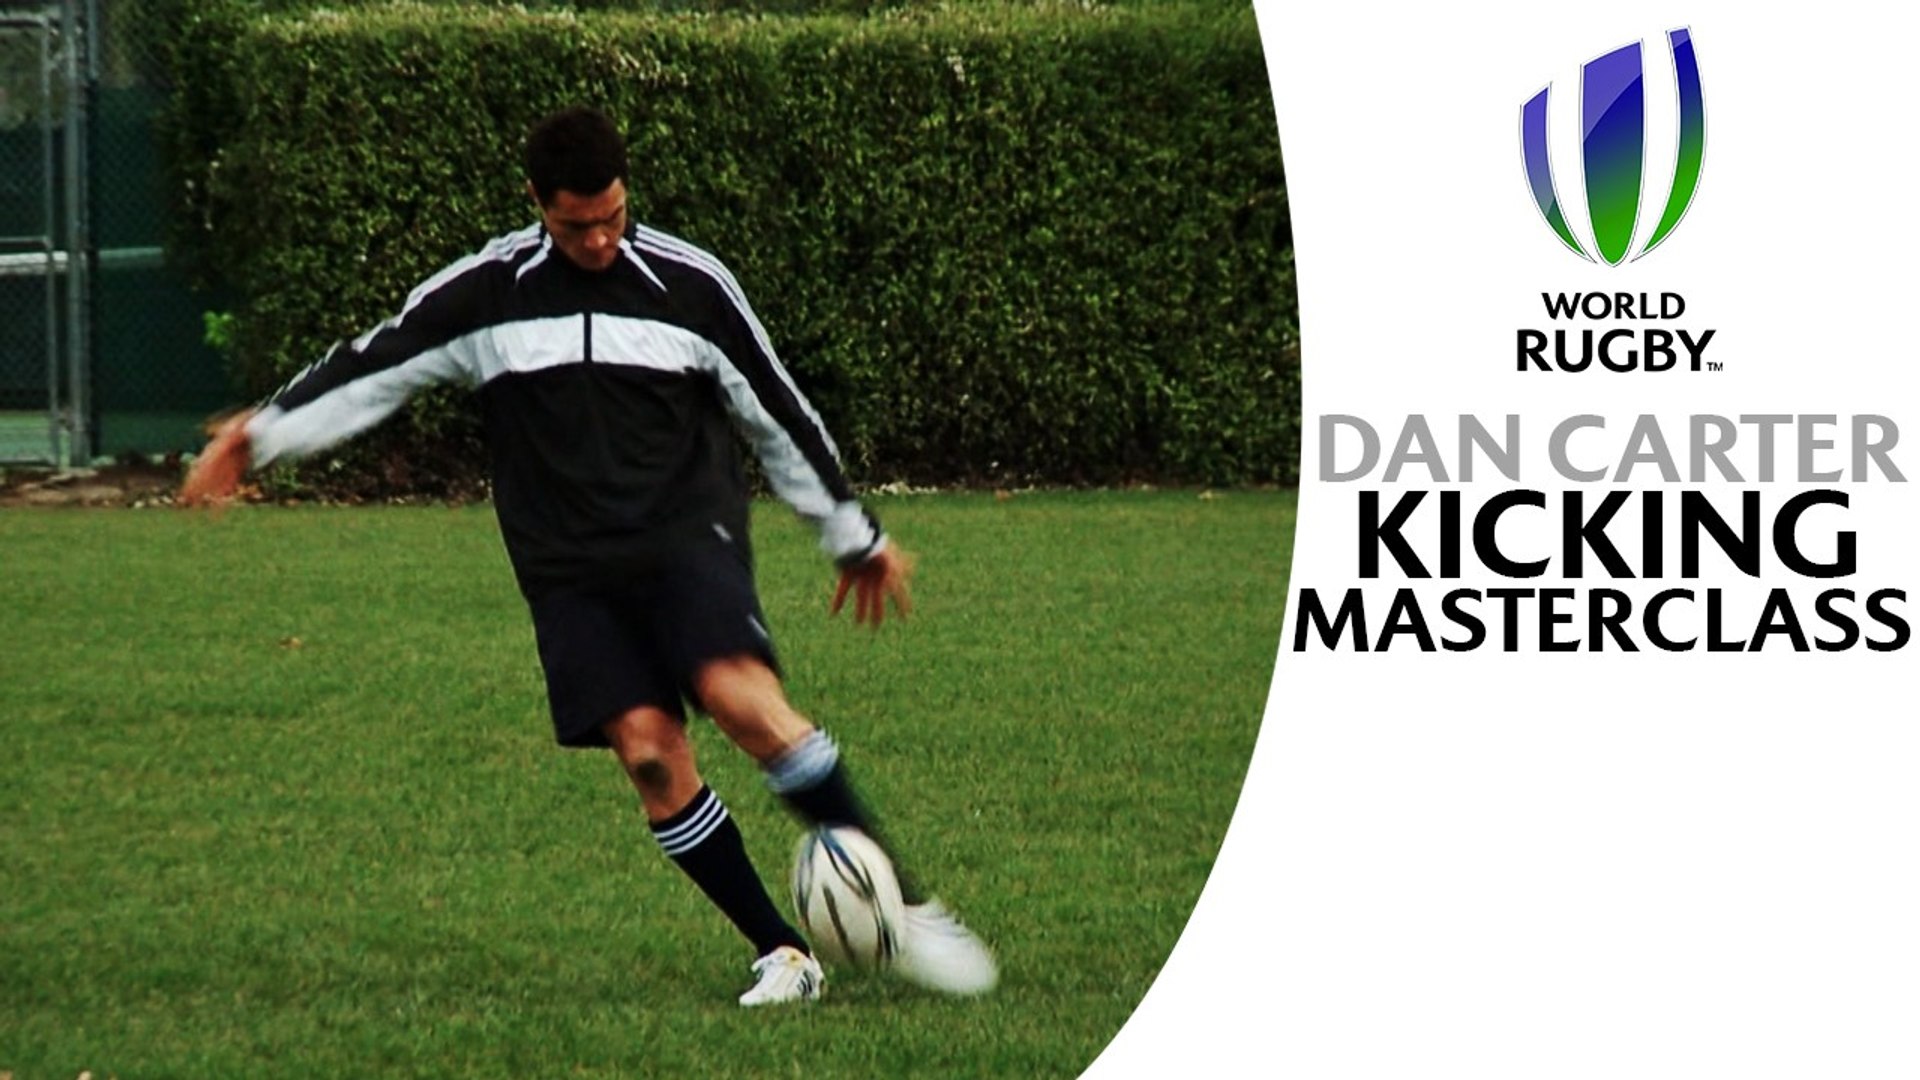 Dan Carter's drop-kicking masterclass - video Dailymotion